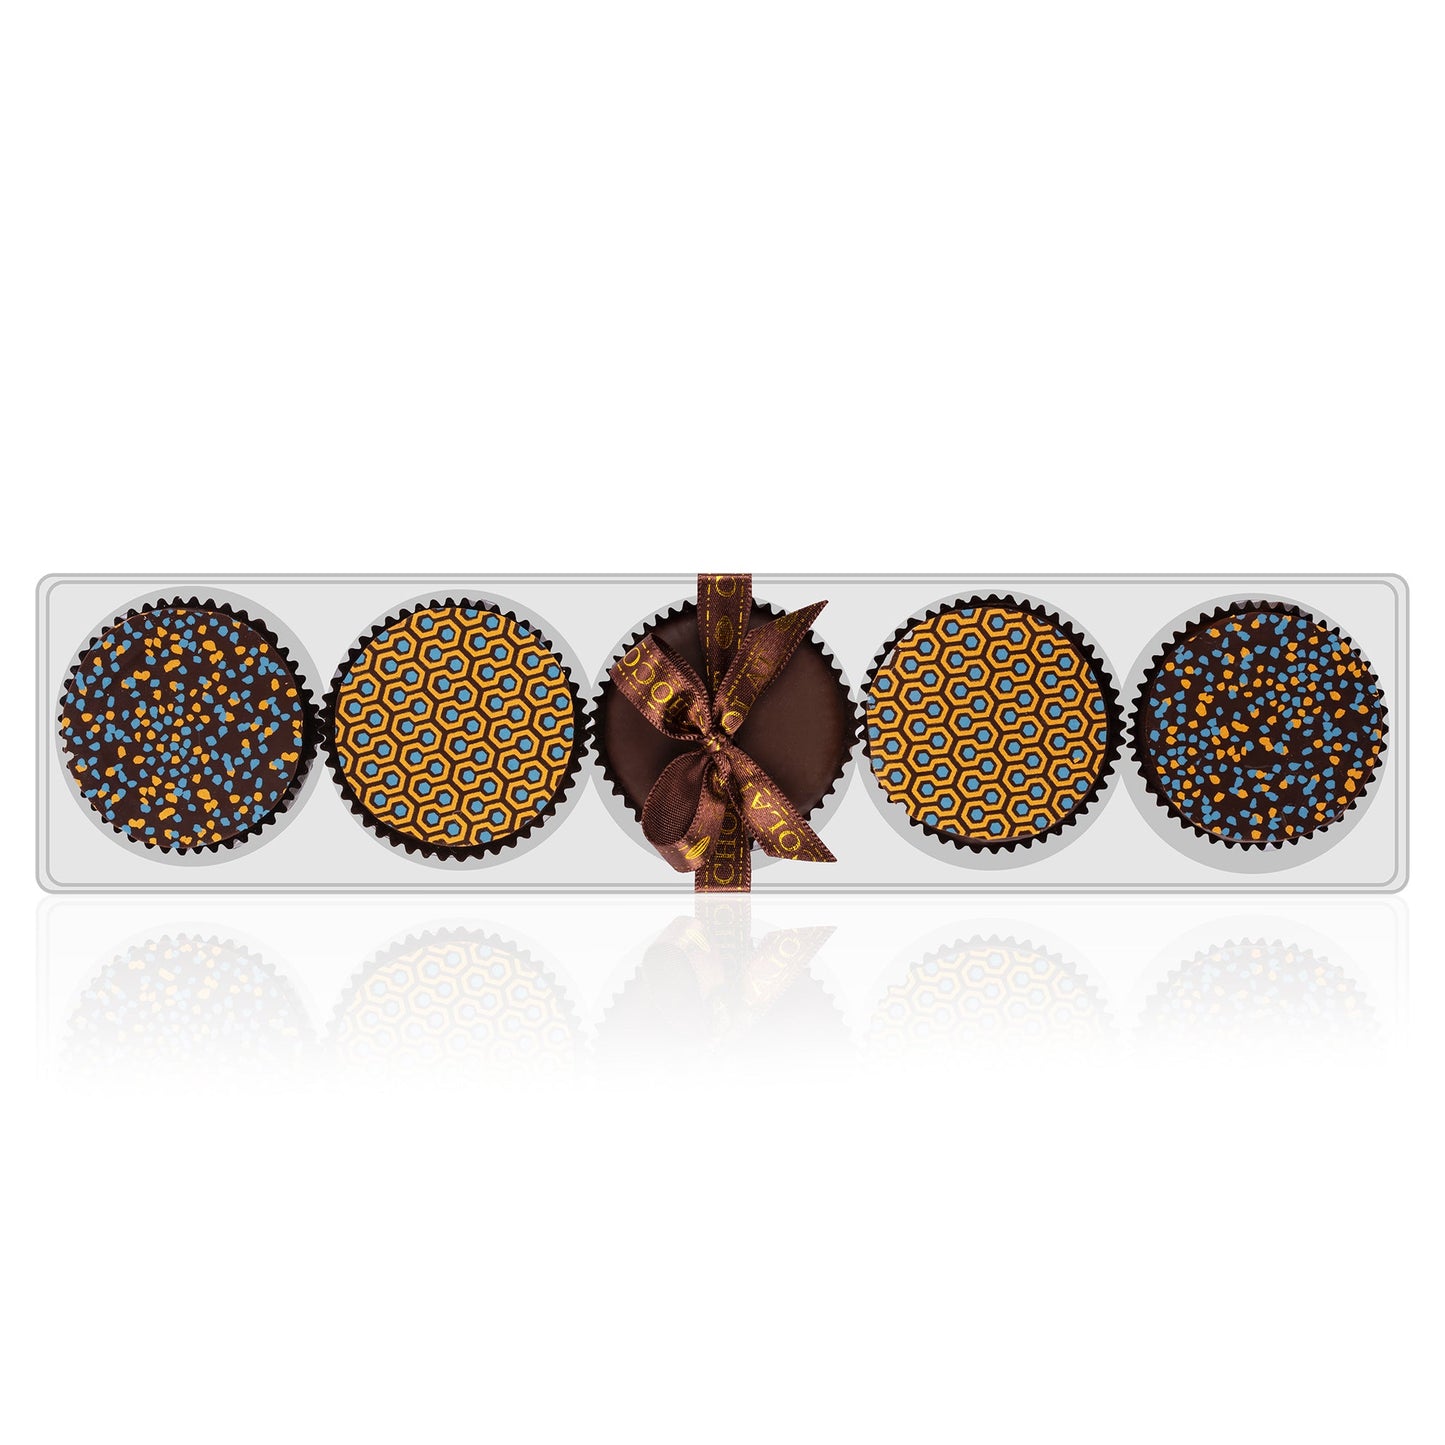 Large Chocolate Gift Basket - Truffles, Orange slices, Cookies, Mendiants, Nougats, Pate de Fruit